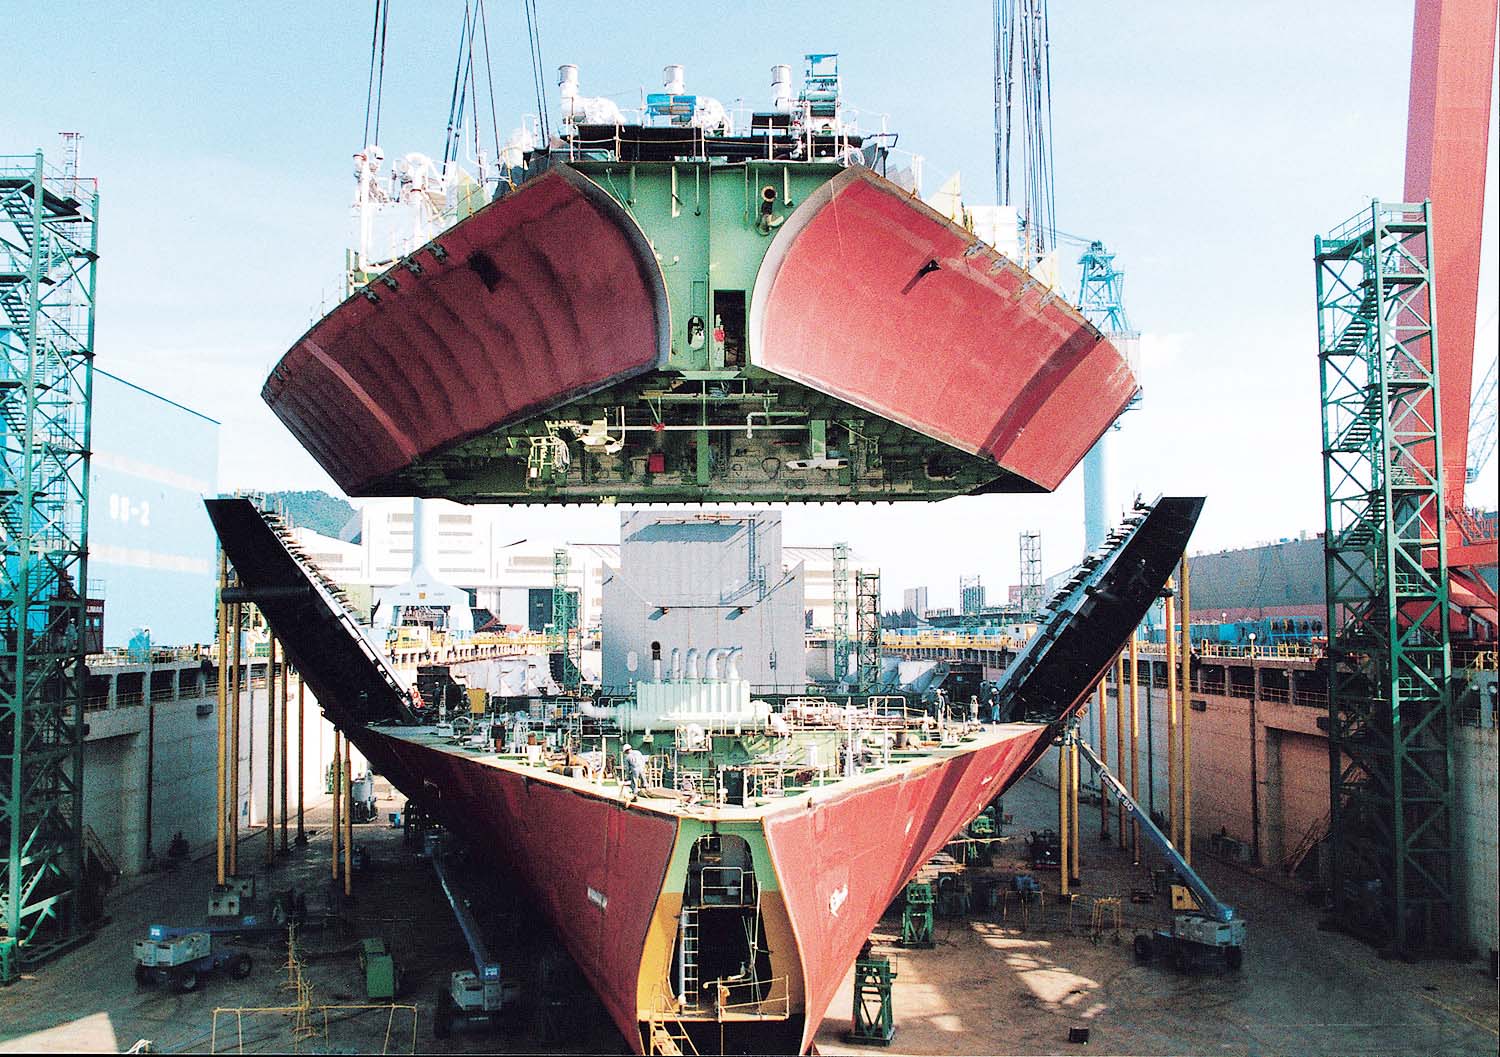 Shipbuilding shares soar on Europe’s natural gas supply problem